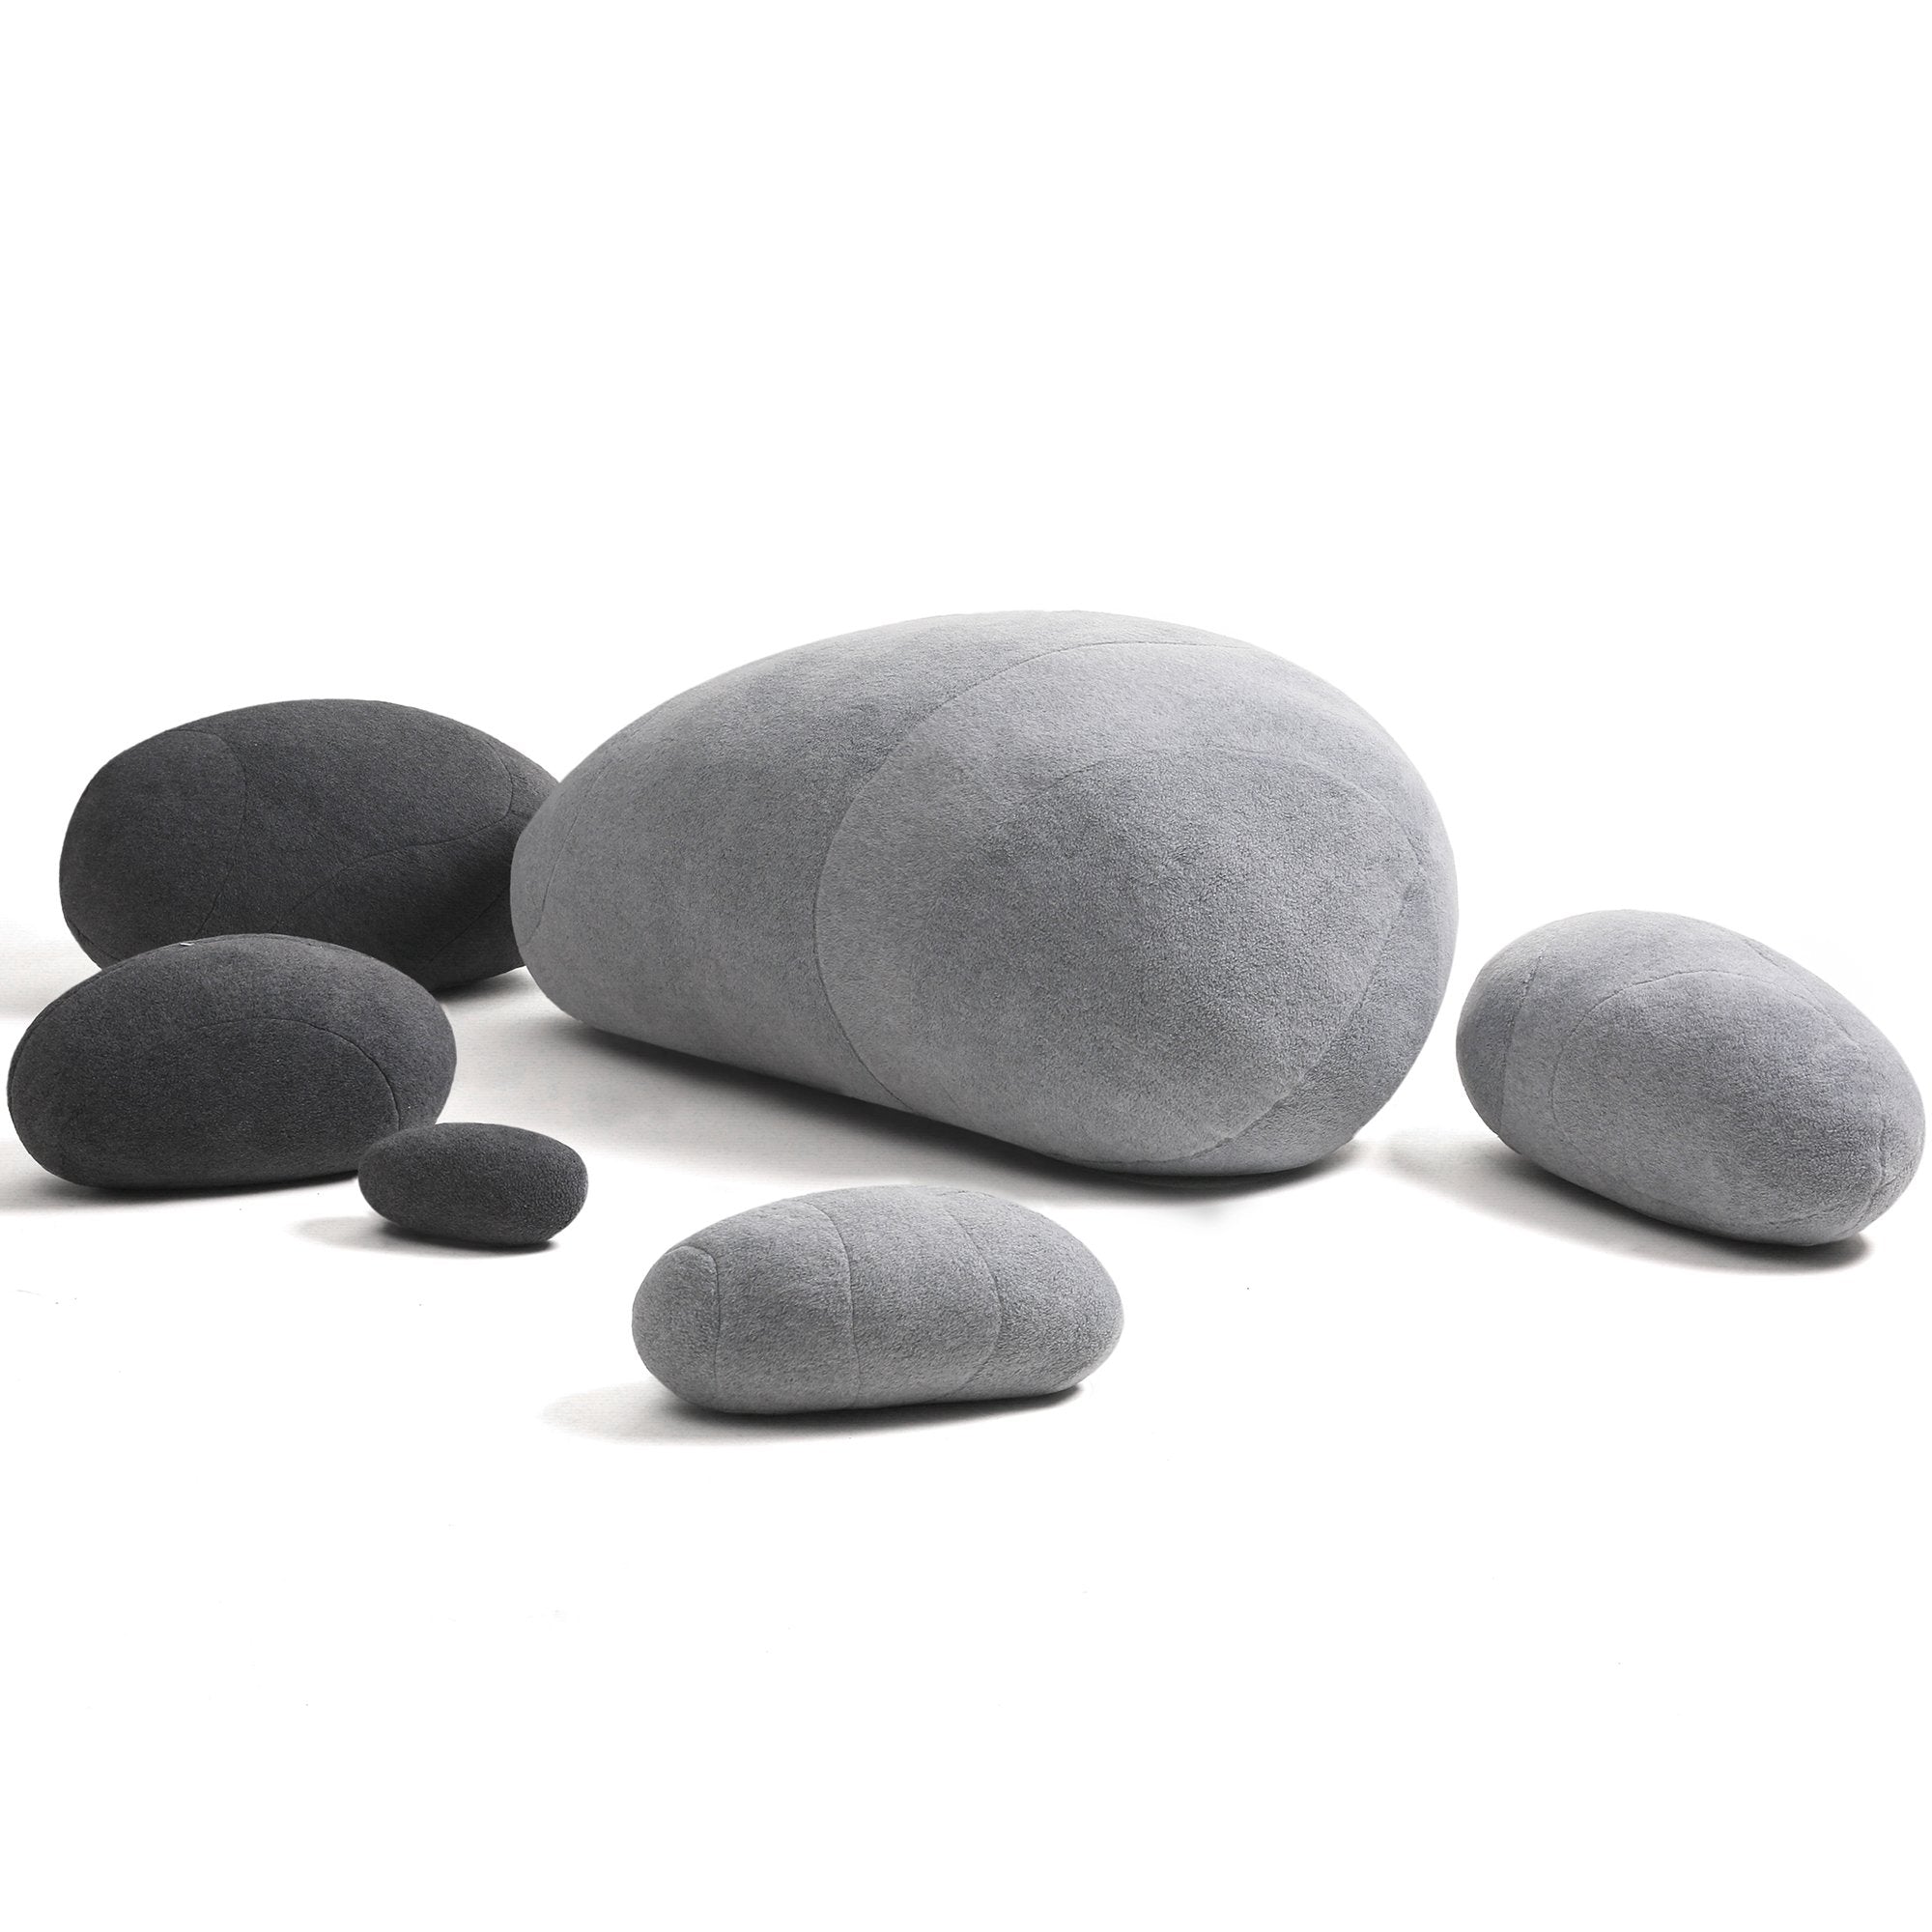 3D Living Stones Pillows 6 Mix Sizes —Light Gray and Dark Gray